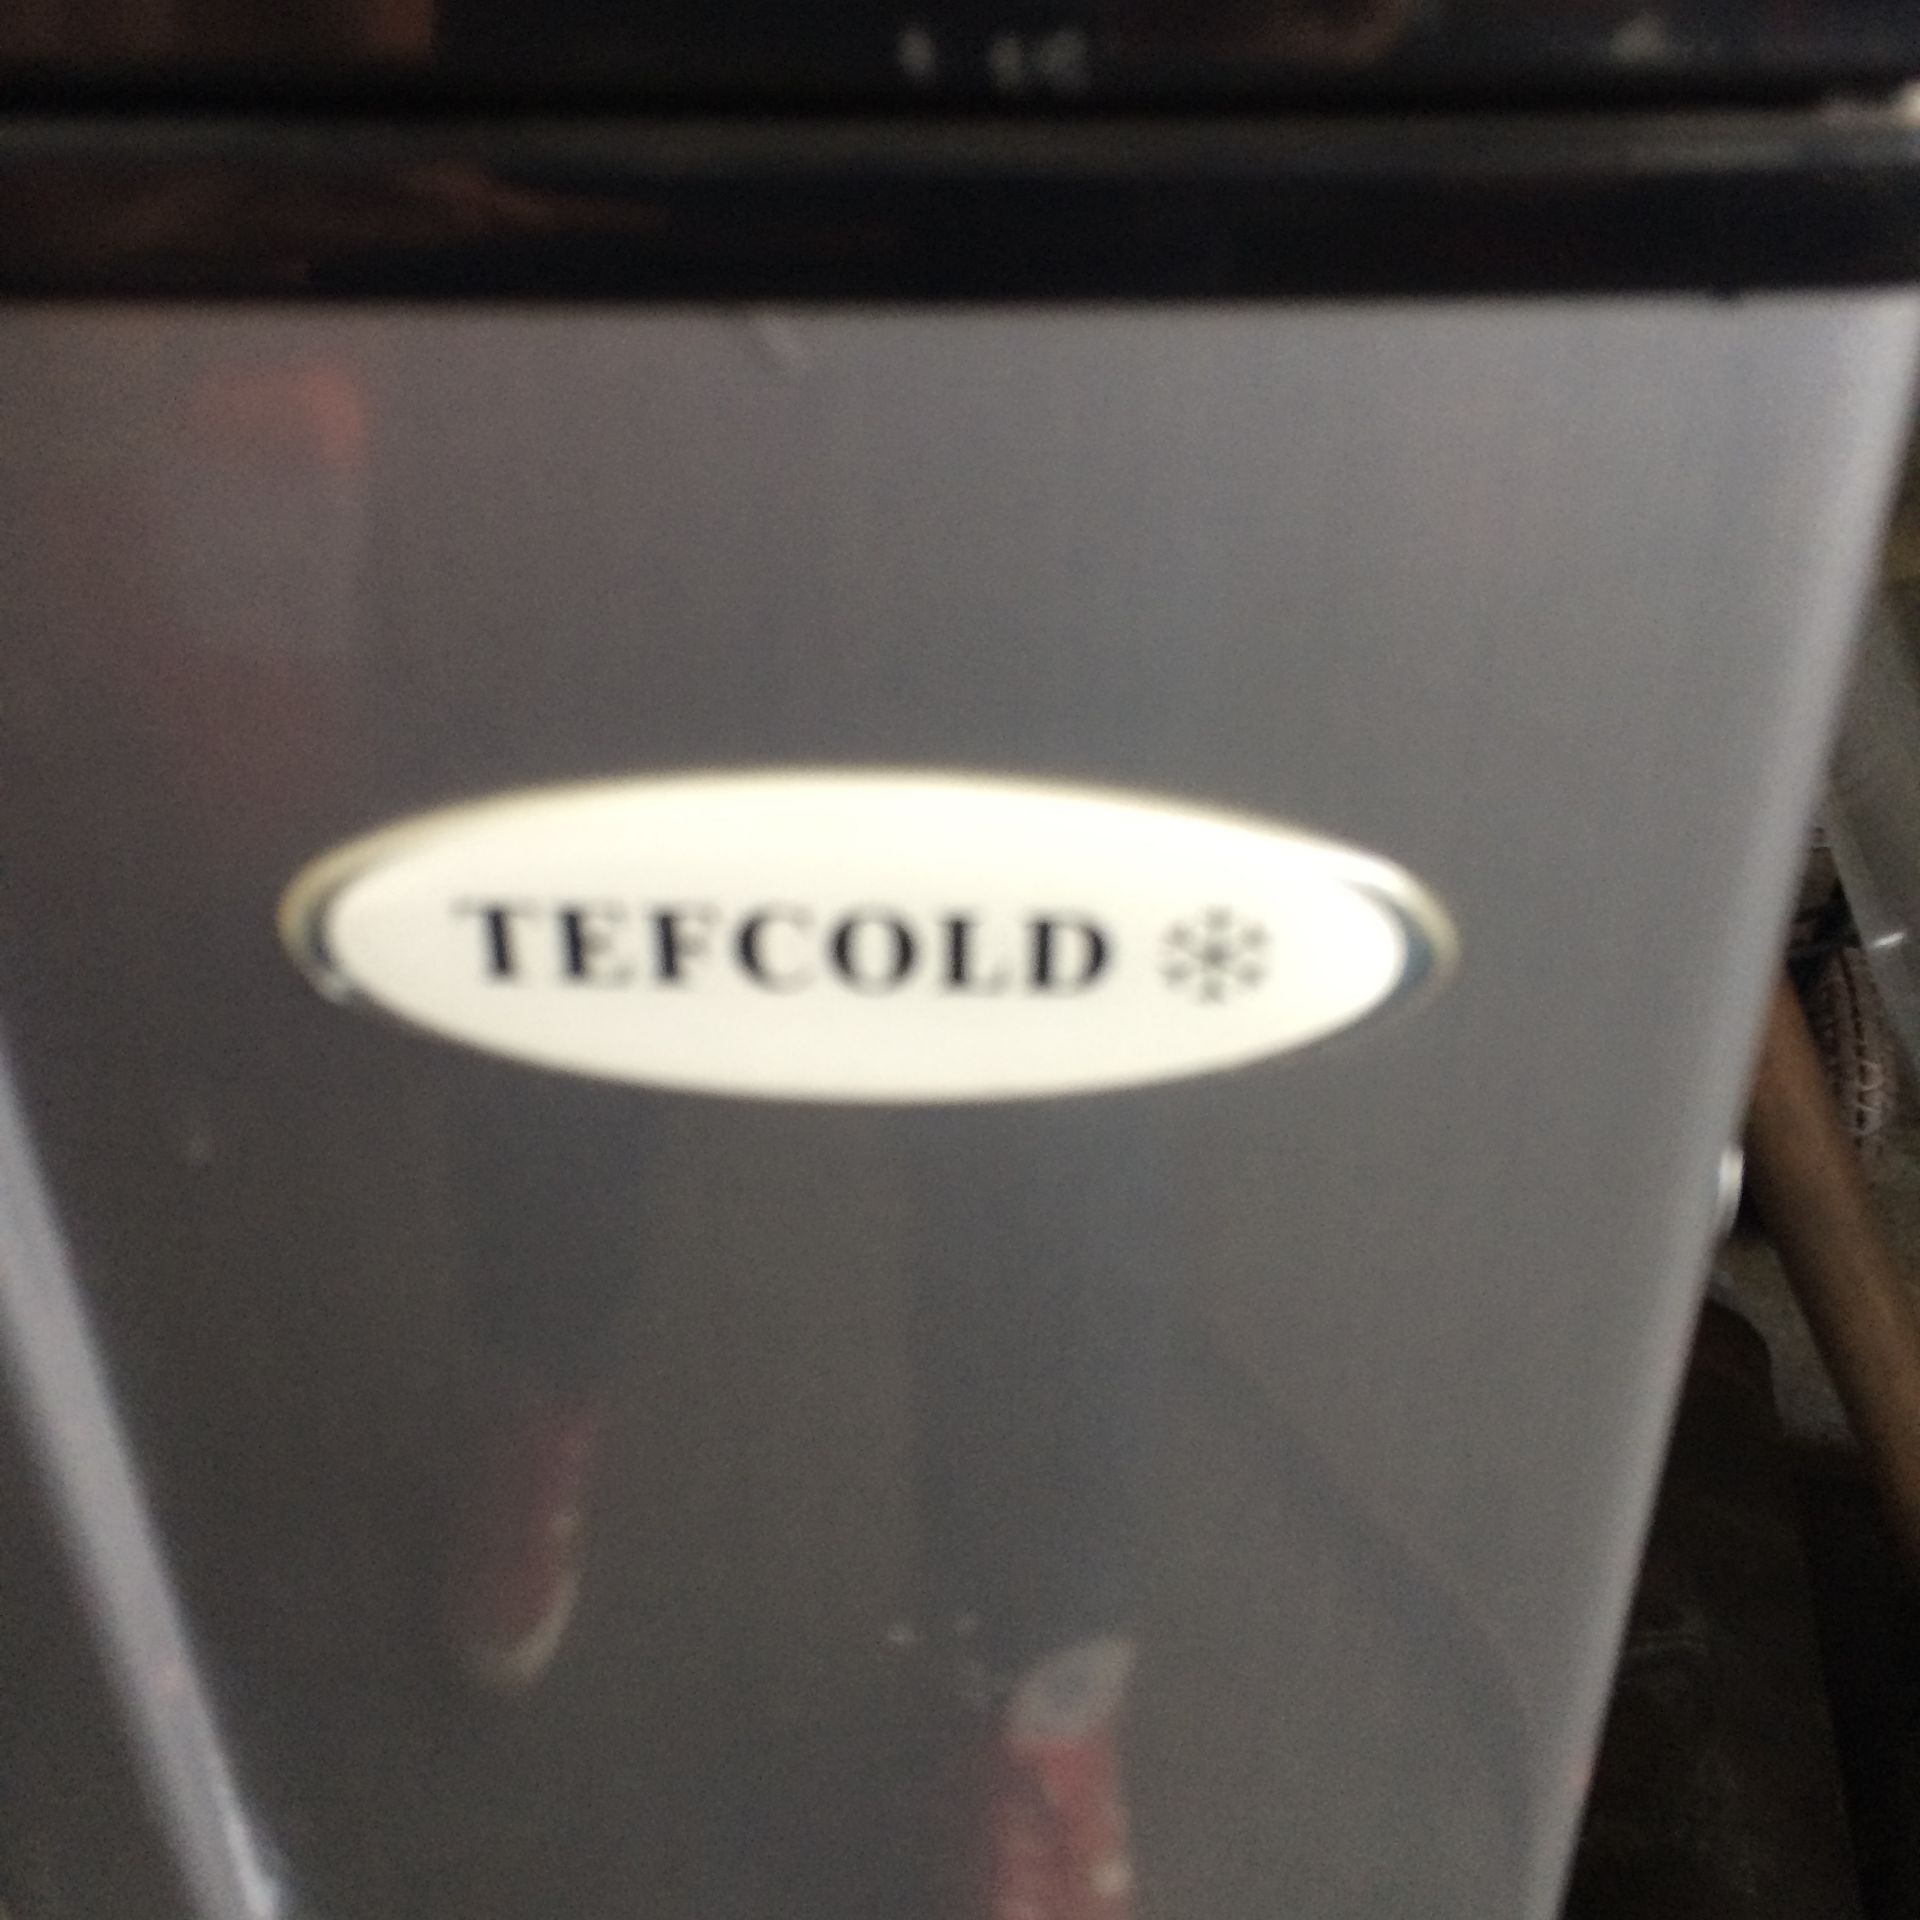 Tefcold Wine fridge, Full working order, No reserve - Image 2 of 4